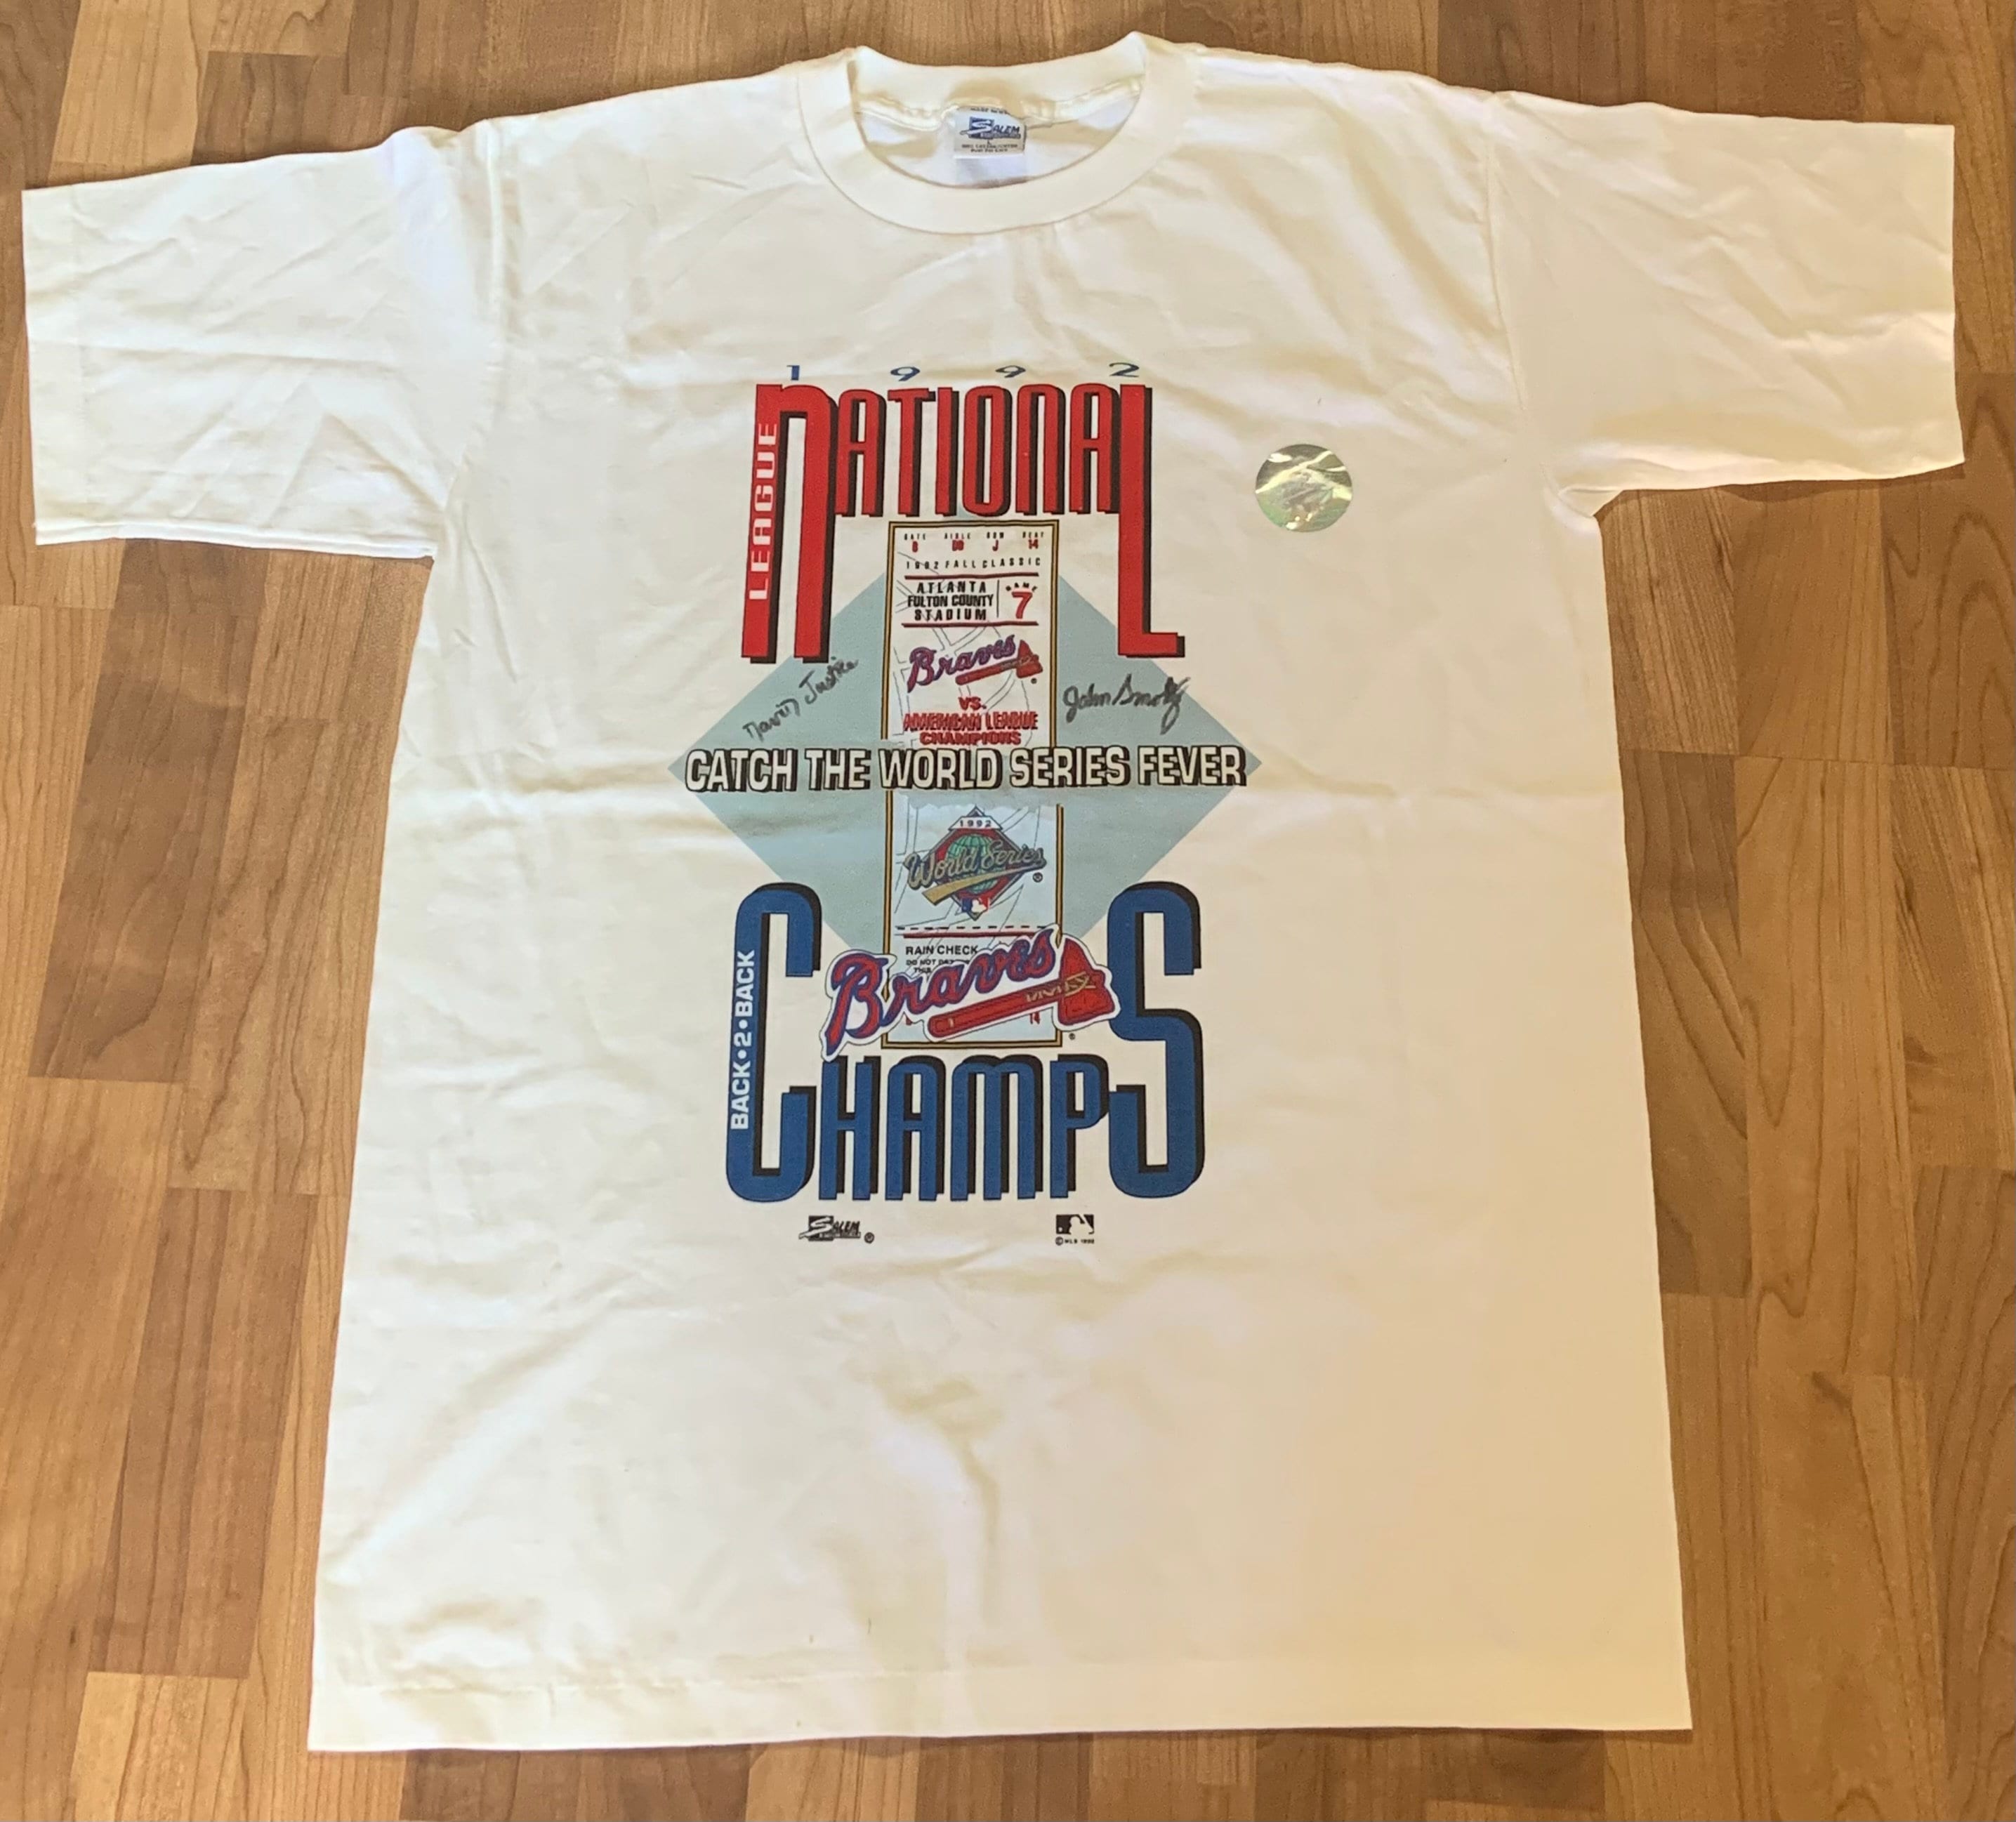 Braves World Series Championships 2021 Signatures Classic Shirt